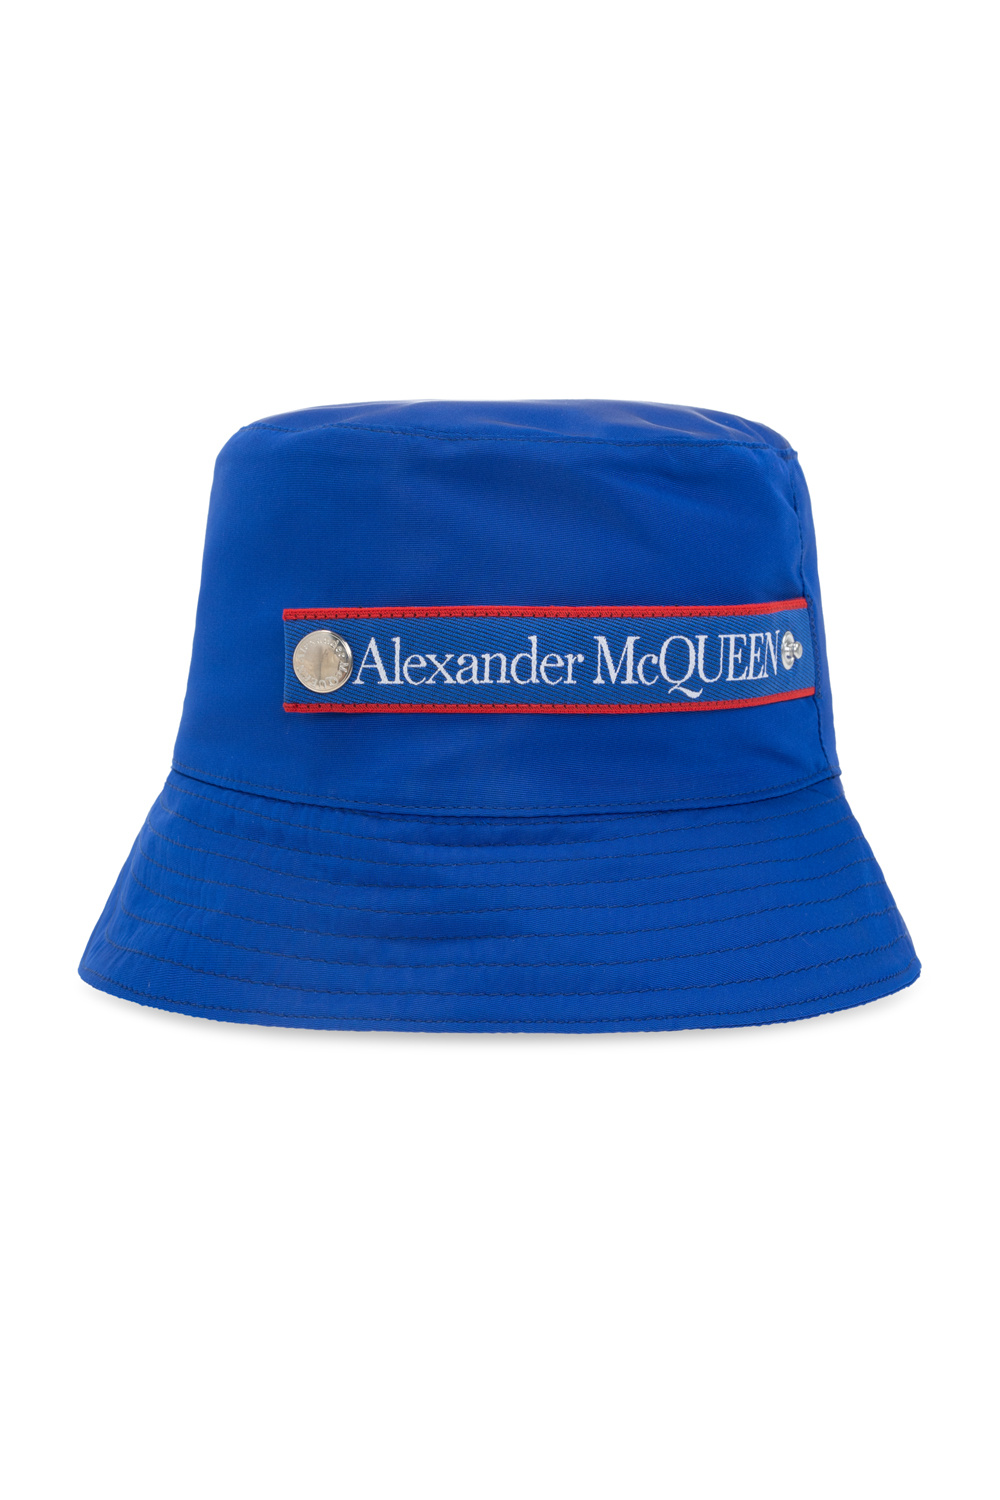 Tommy Hilfiger Winter Bucket Hat - Alexander McQueen Logo | embroidered hat | Men's Accessories - StclaircomoShops